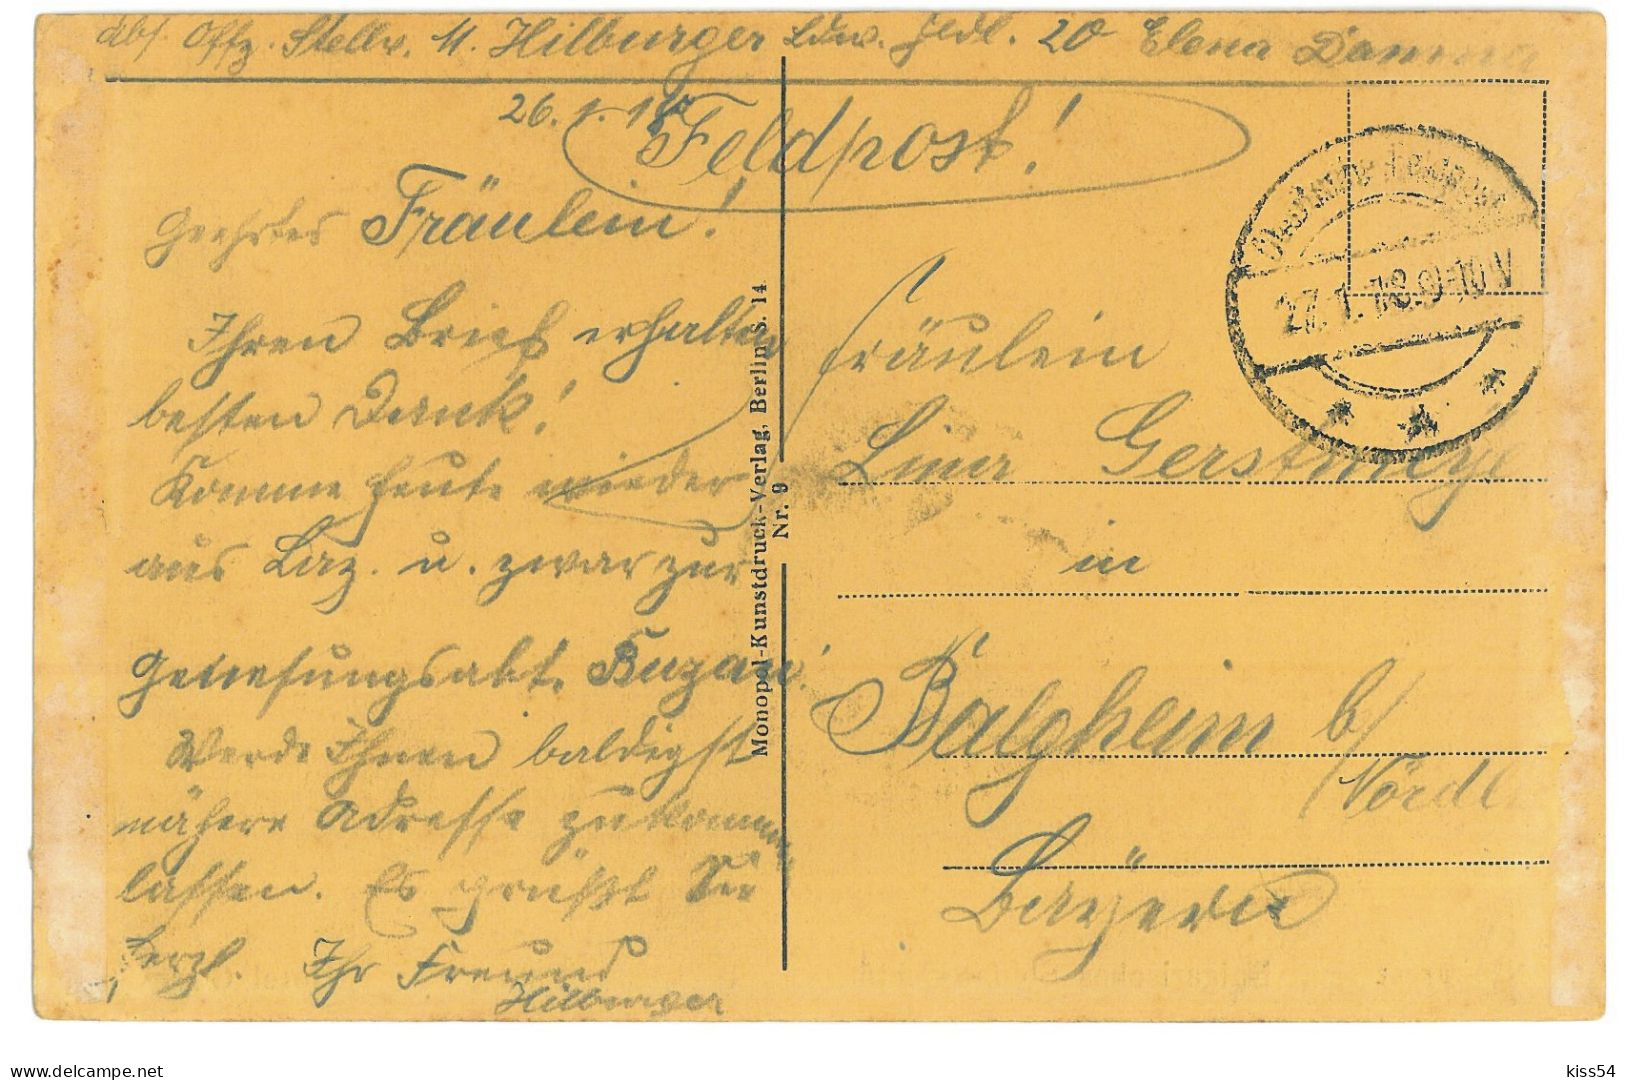 RO 91 - 21222 BUCURESTI, Hotel Capsa, Romania - Old Postcard, CENSOR - Used - 1918 - Roumanie